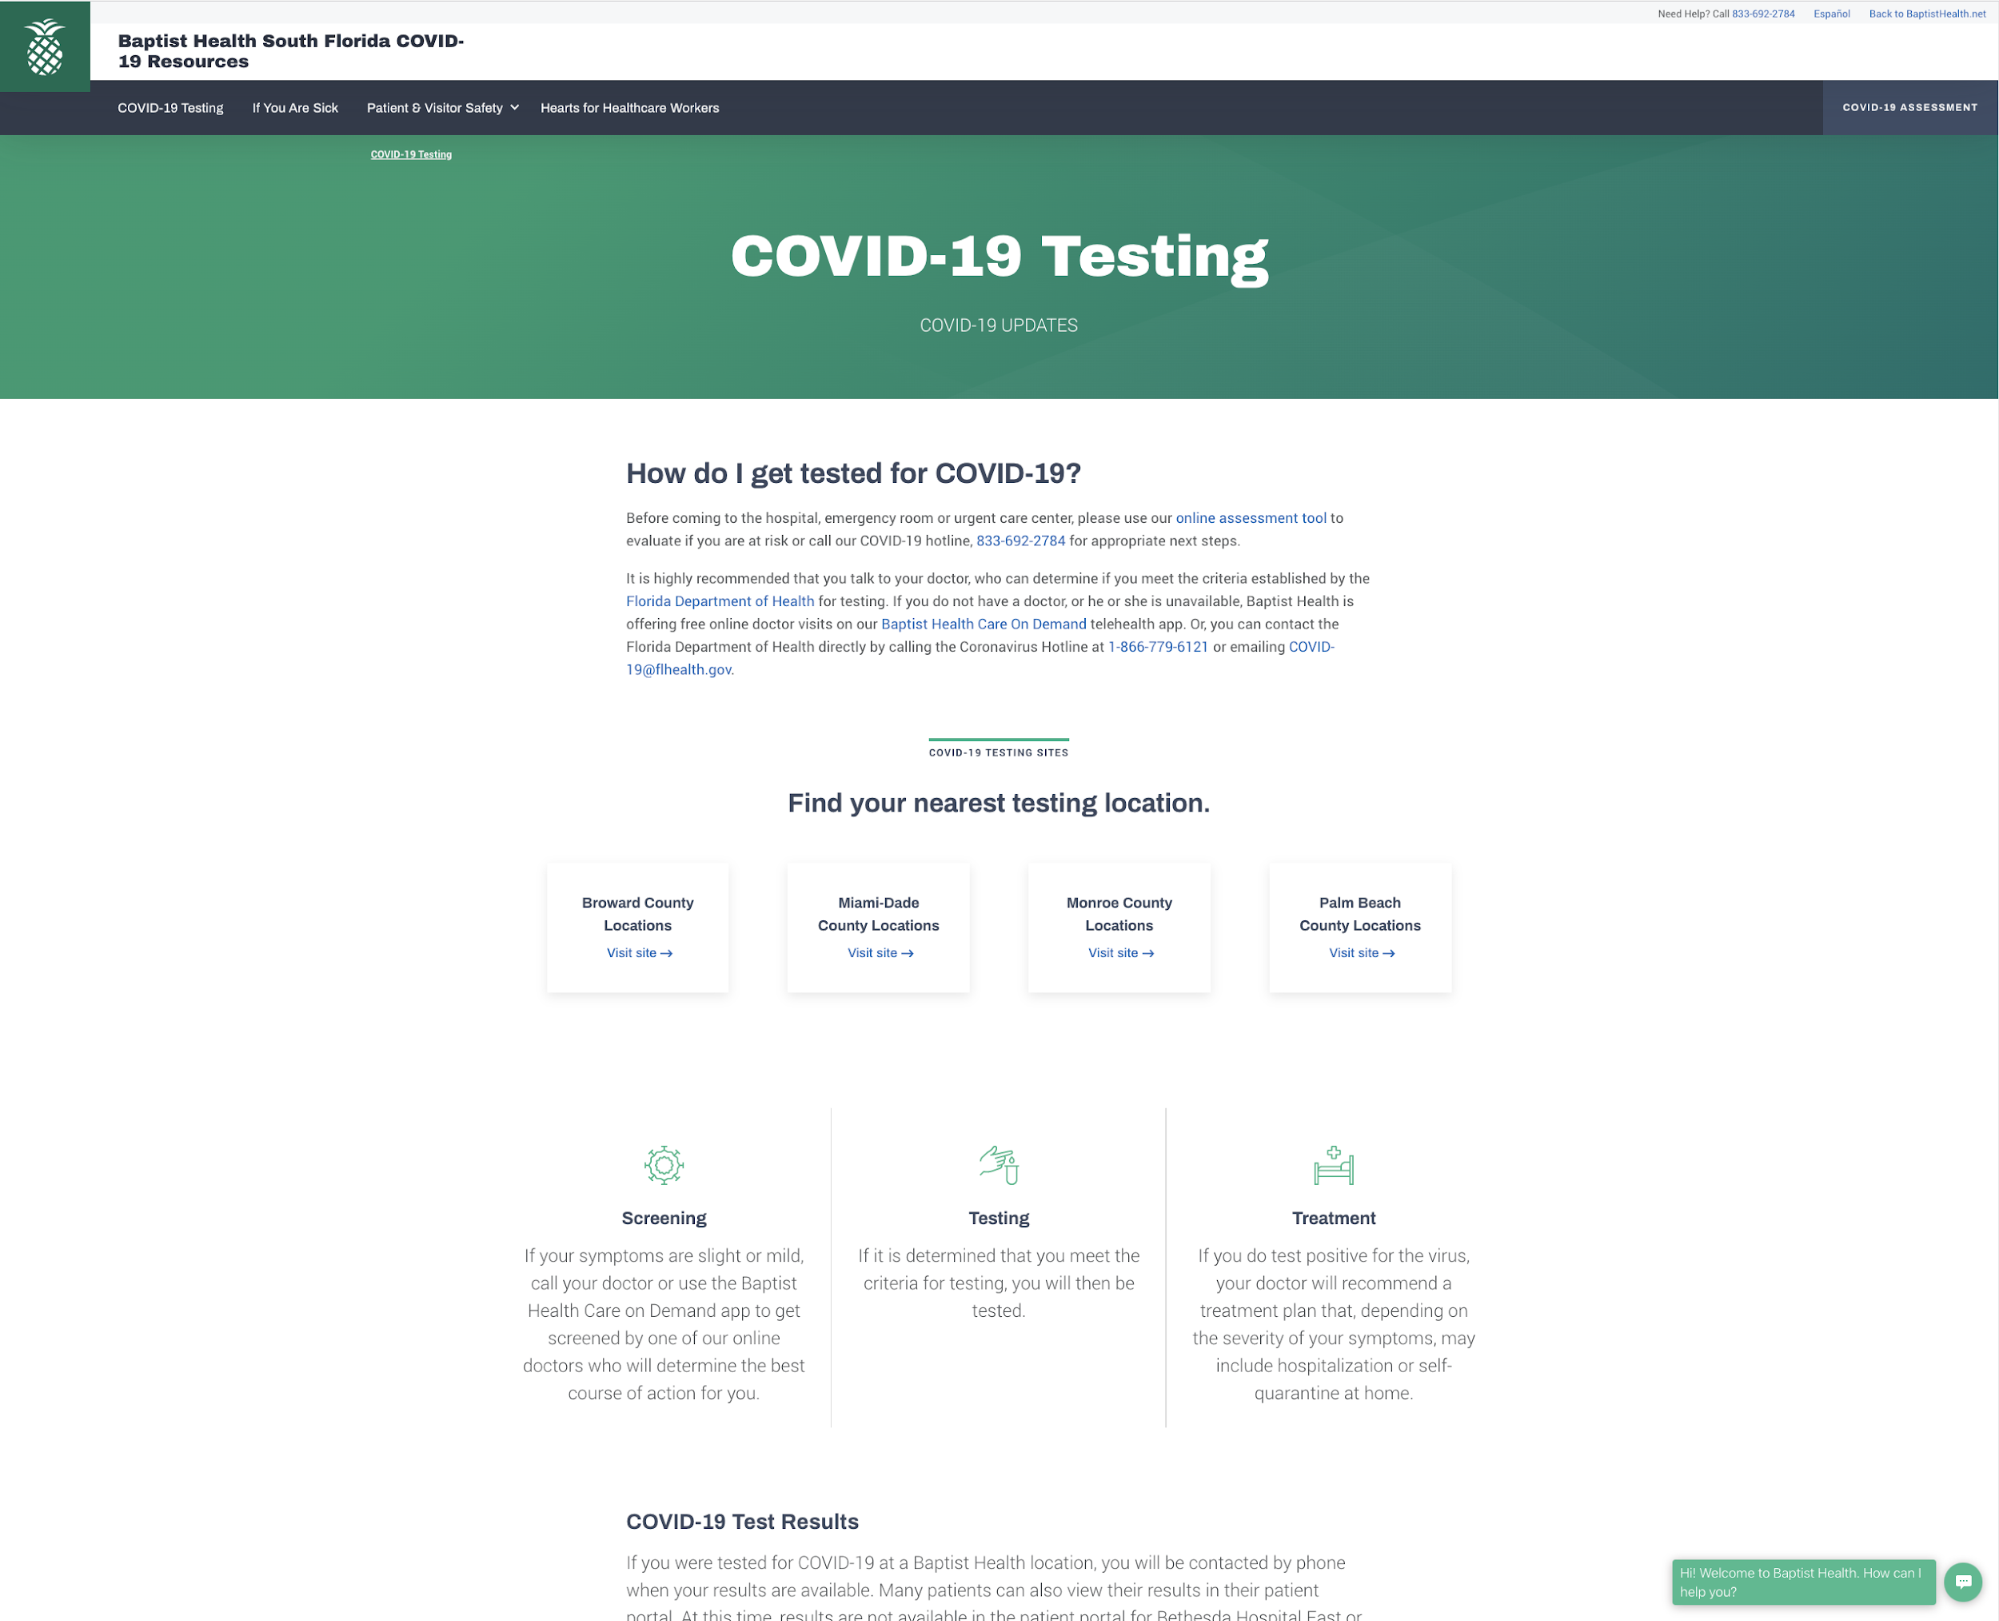 Screenshot of Baptist Health's "COVID-19 Testing" page.